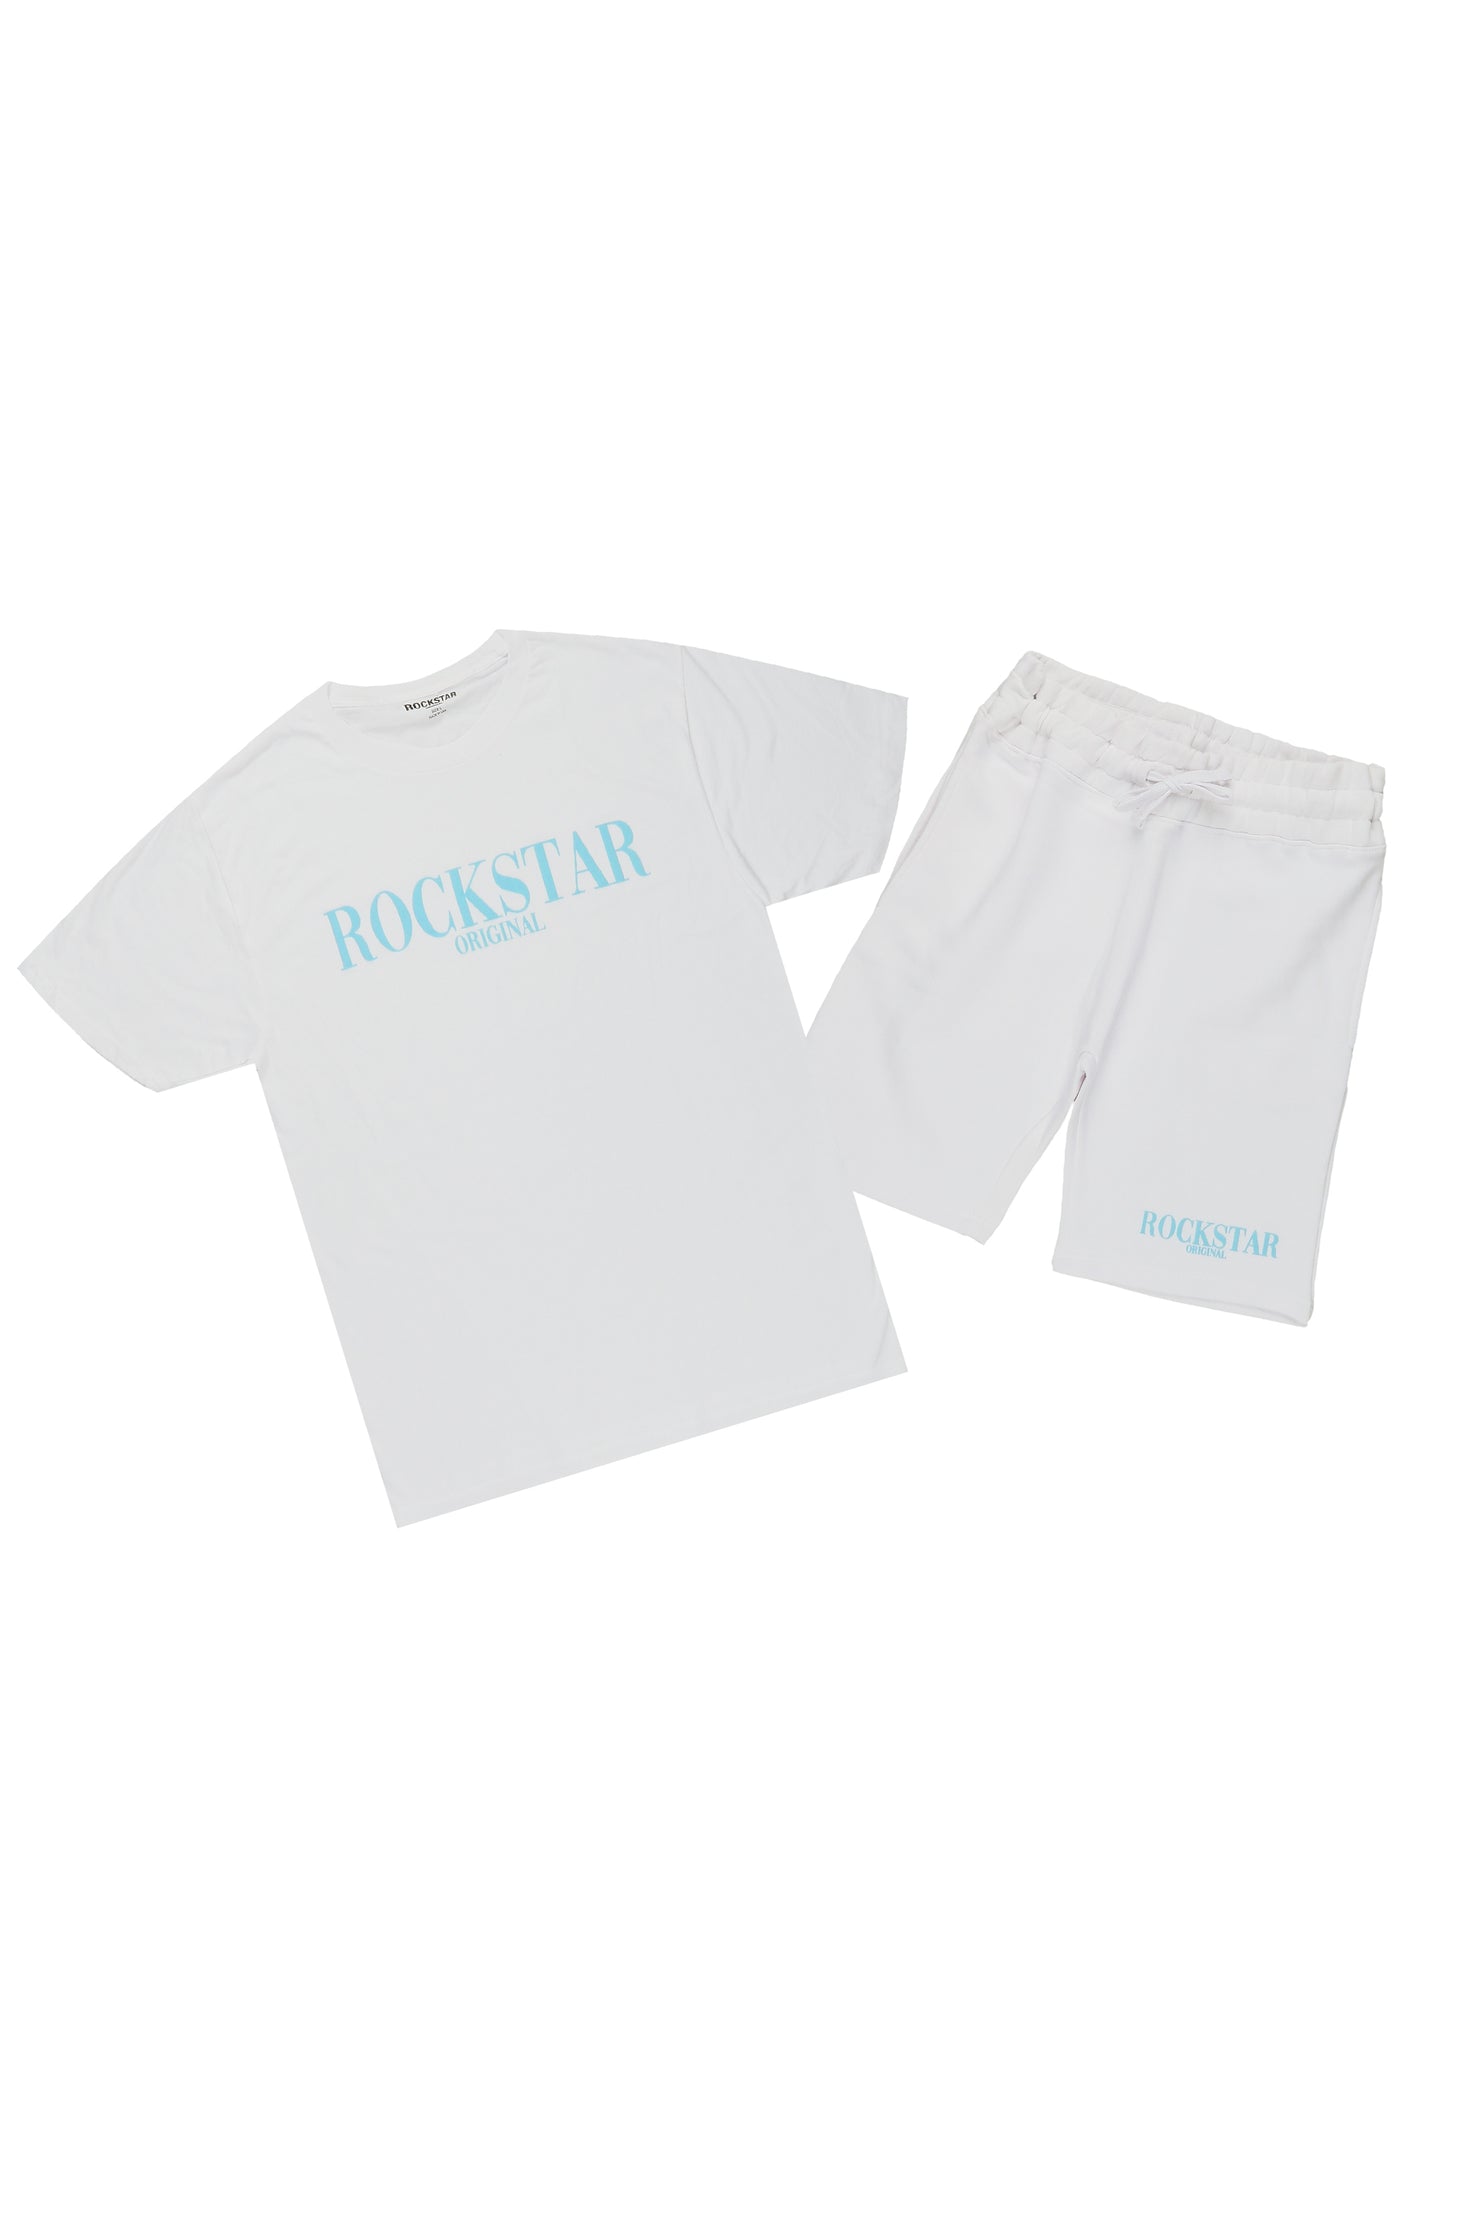 Octavio White T-Shirt/Short Set